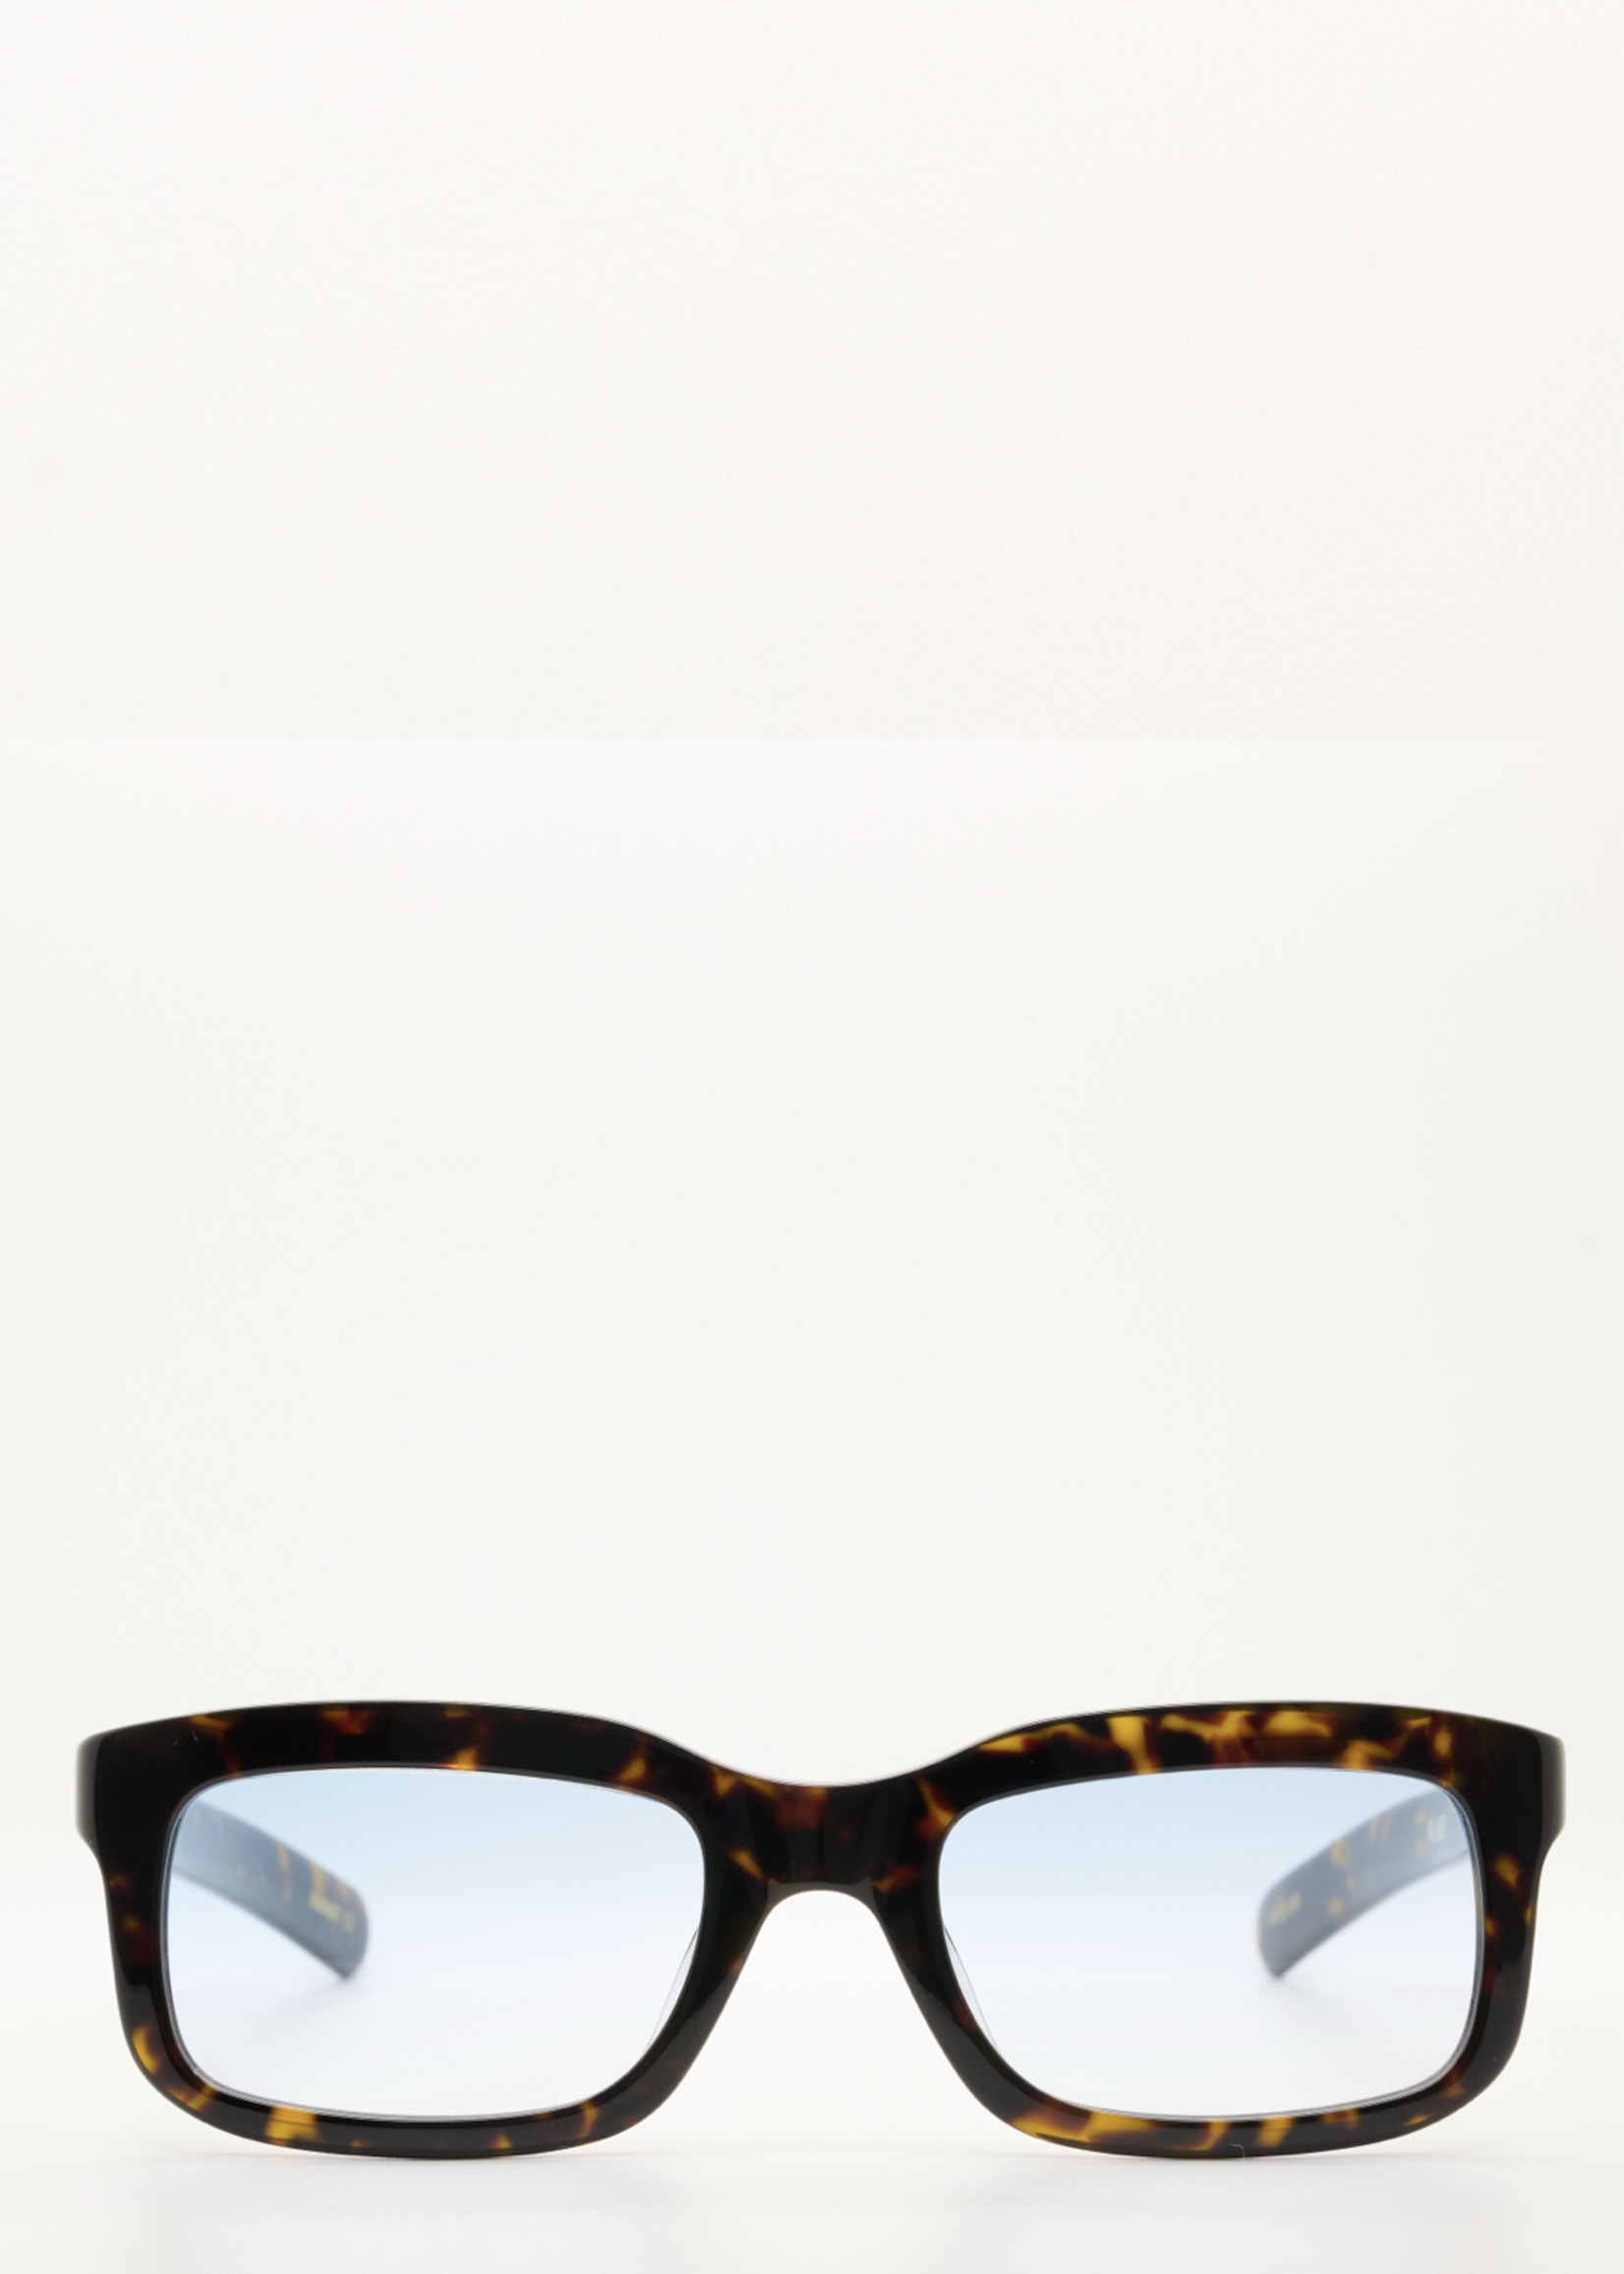 FLATLIST  PALMER Sunglasses in Dark Tortoise with Blue Gradient Lens